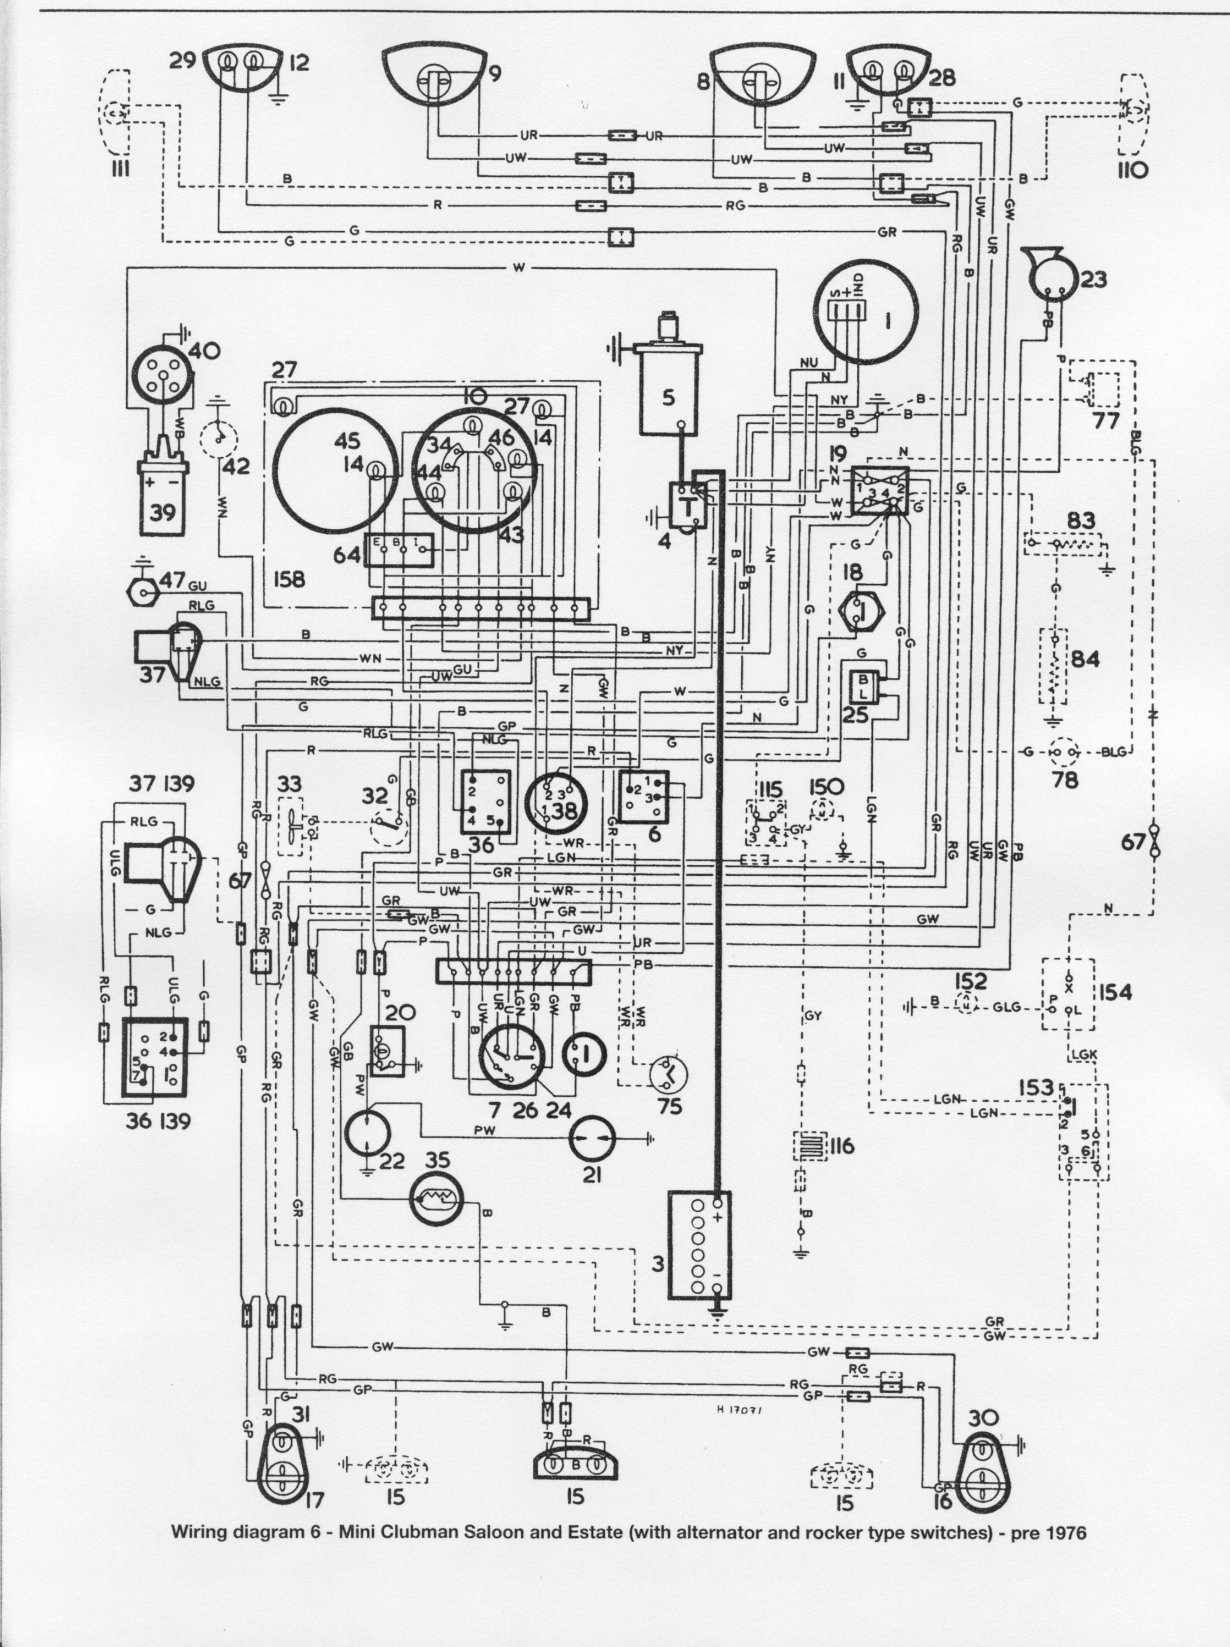 MINI - Car PDF Manual, Wiring Diagram & Fault Codes DTC Chevy Trailblazer Radio CAR PDF Manuals & Fault Codes DTC